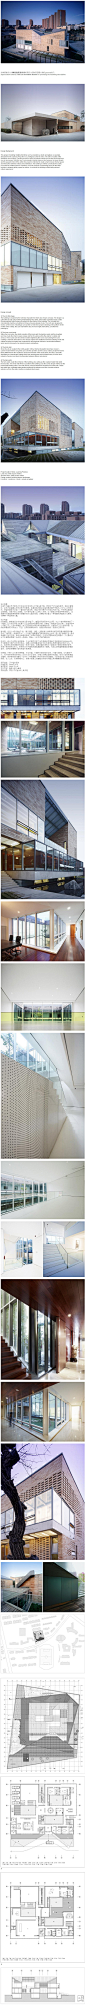 Concave House Tao Lei Architect Studio - 私人 住宅 工作室 私人美术馆 .jpg